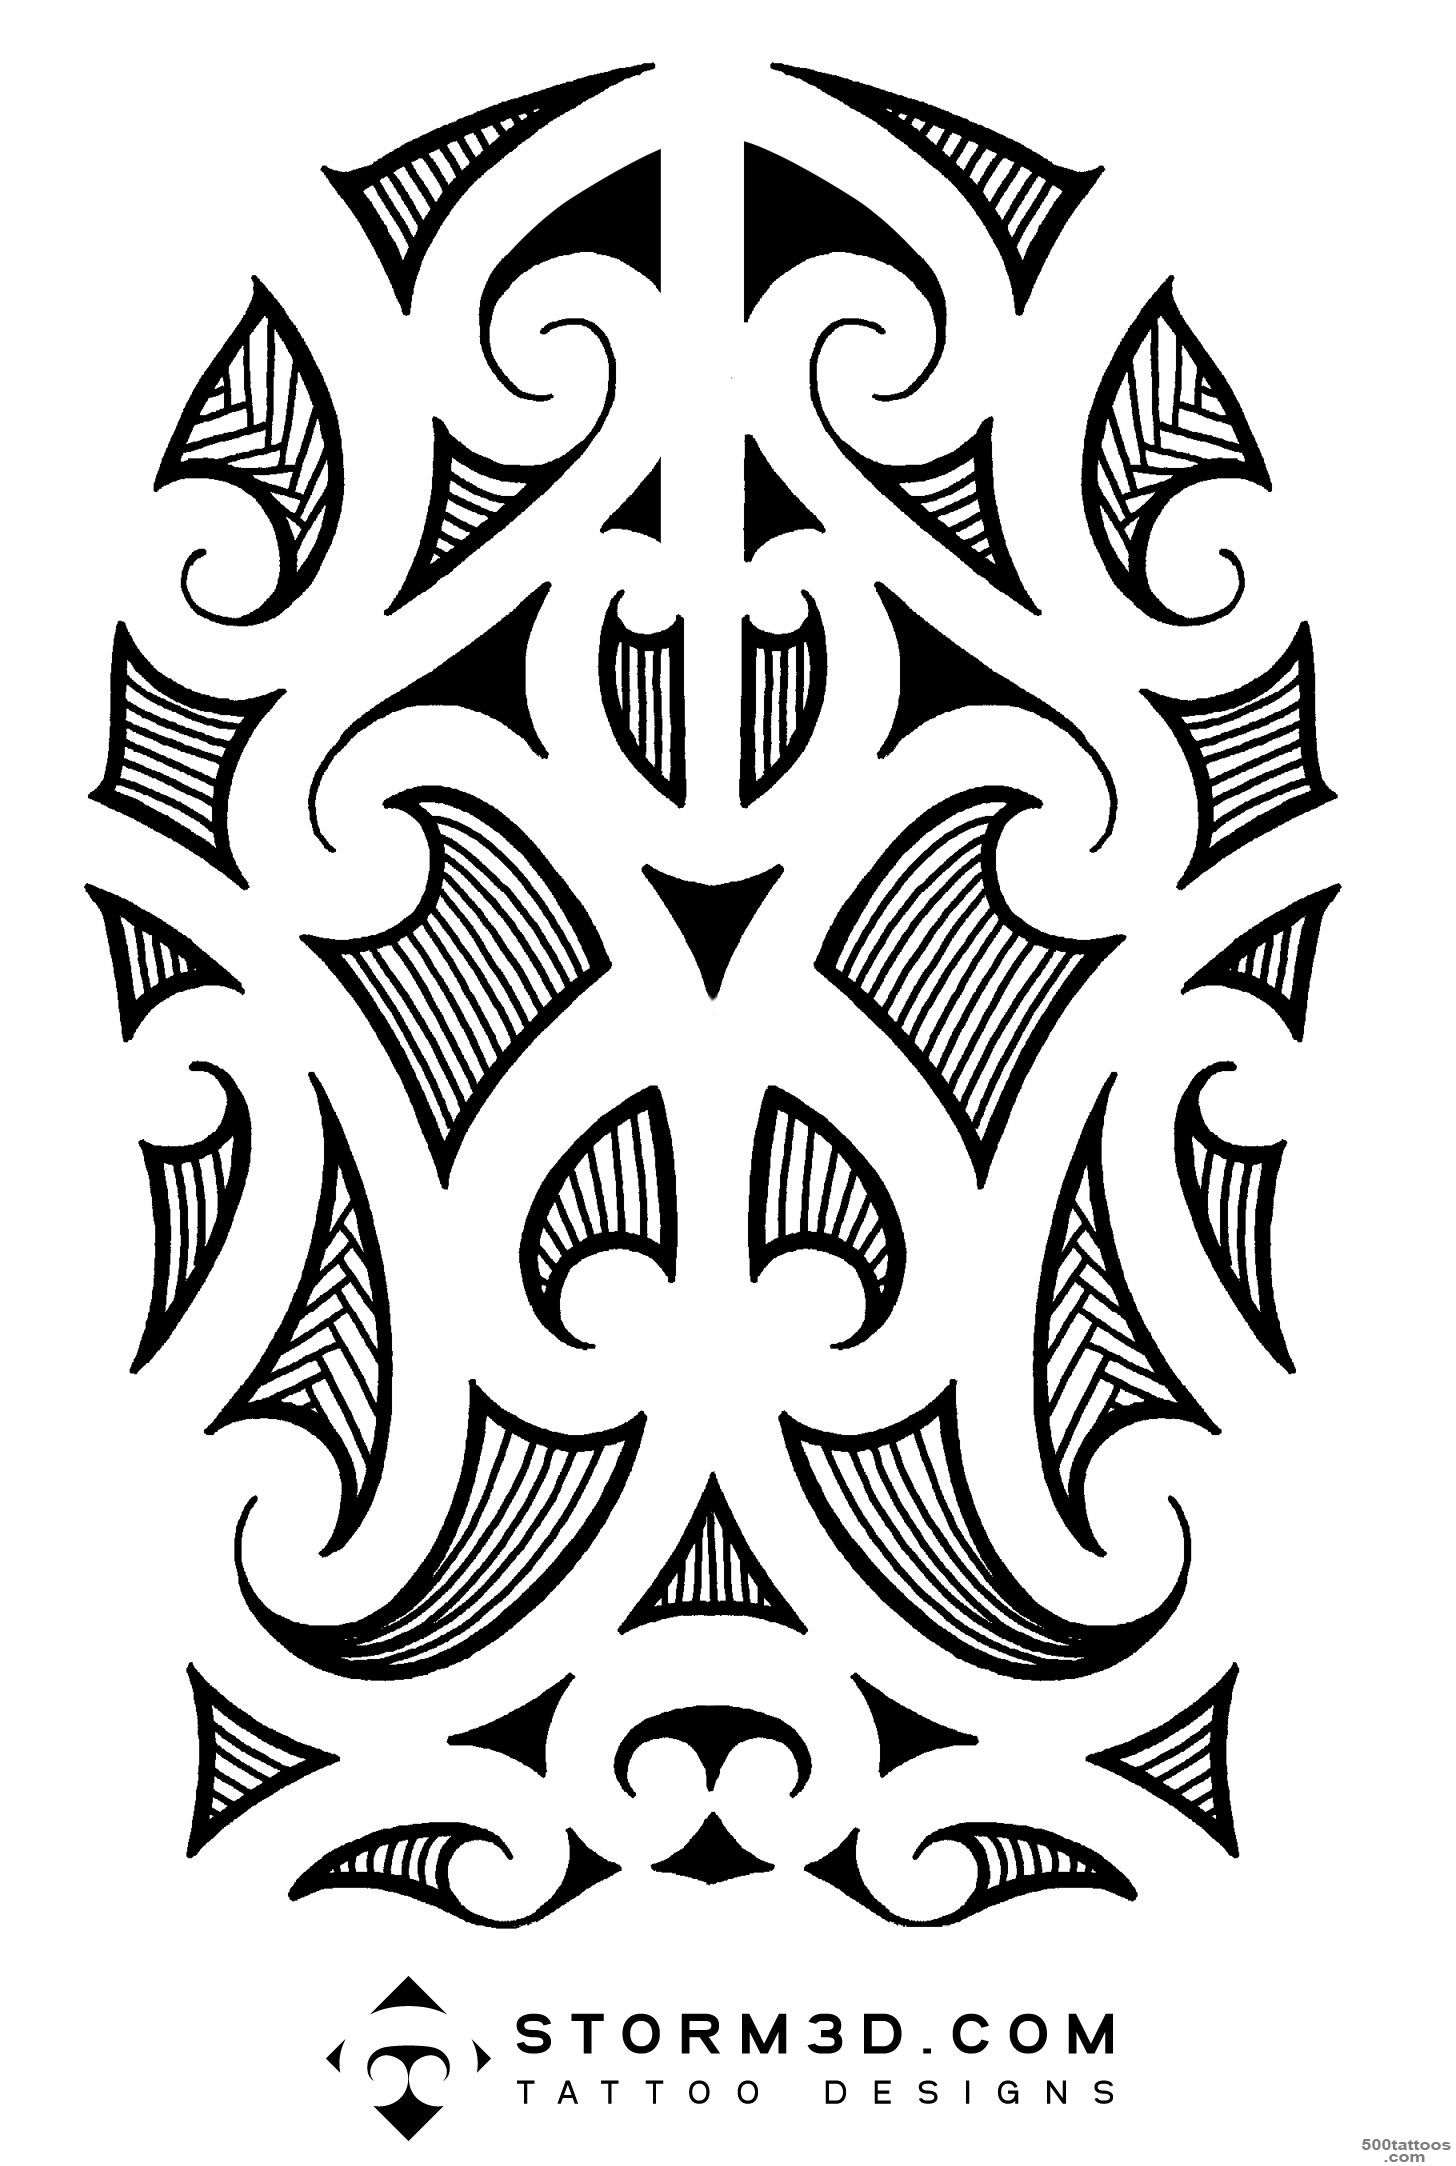 Maori, Samoan and Polynesian inspired tattoo designs, hand drawn ..._43